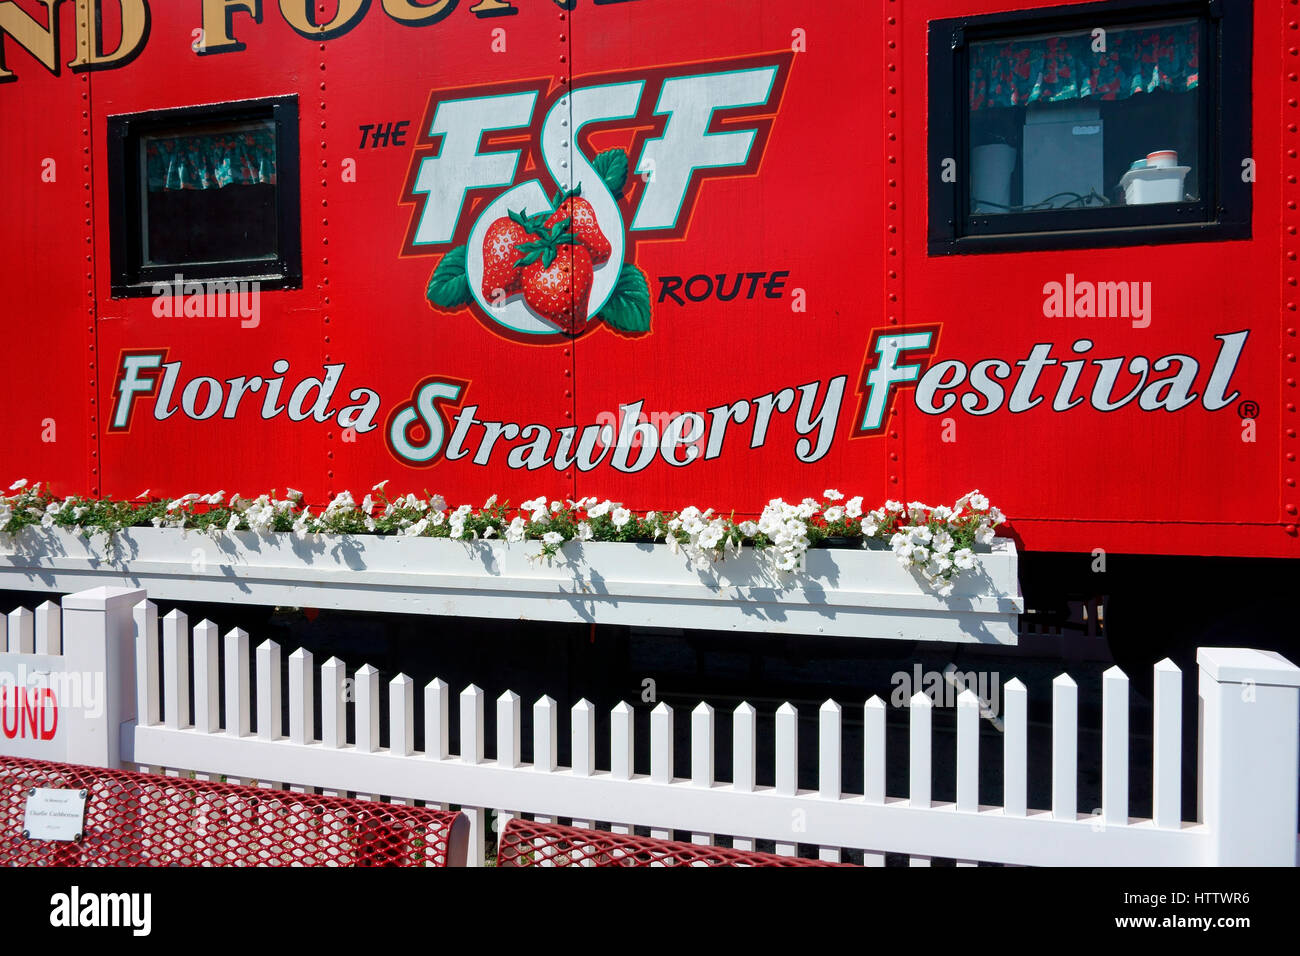 Florida Strawberry Festival caboose sign Stock Photo